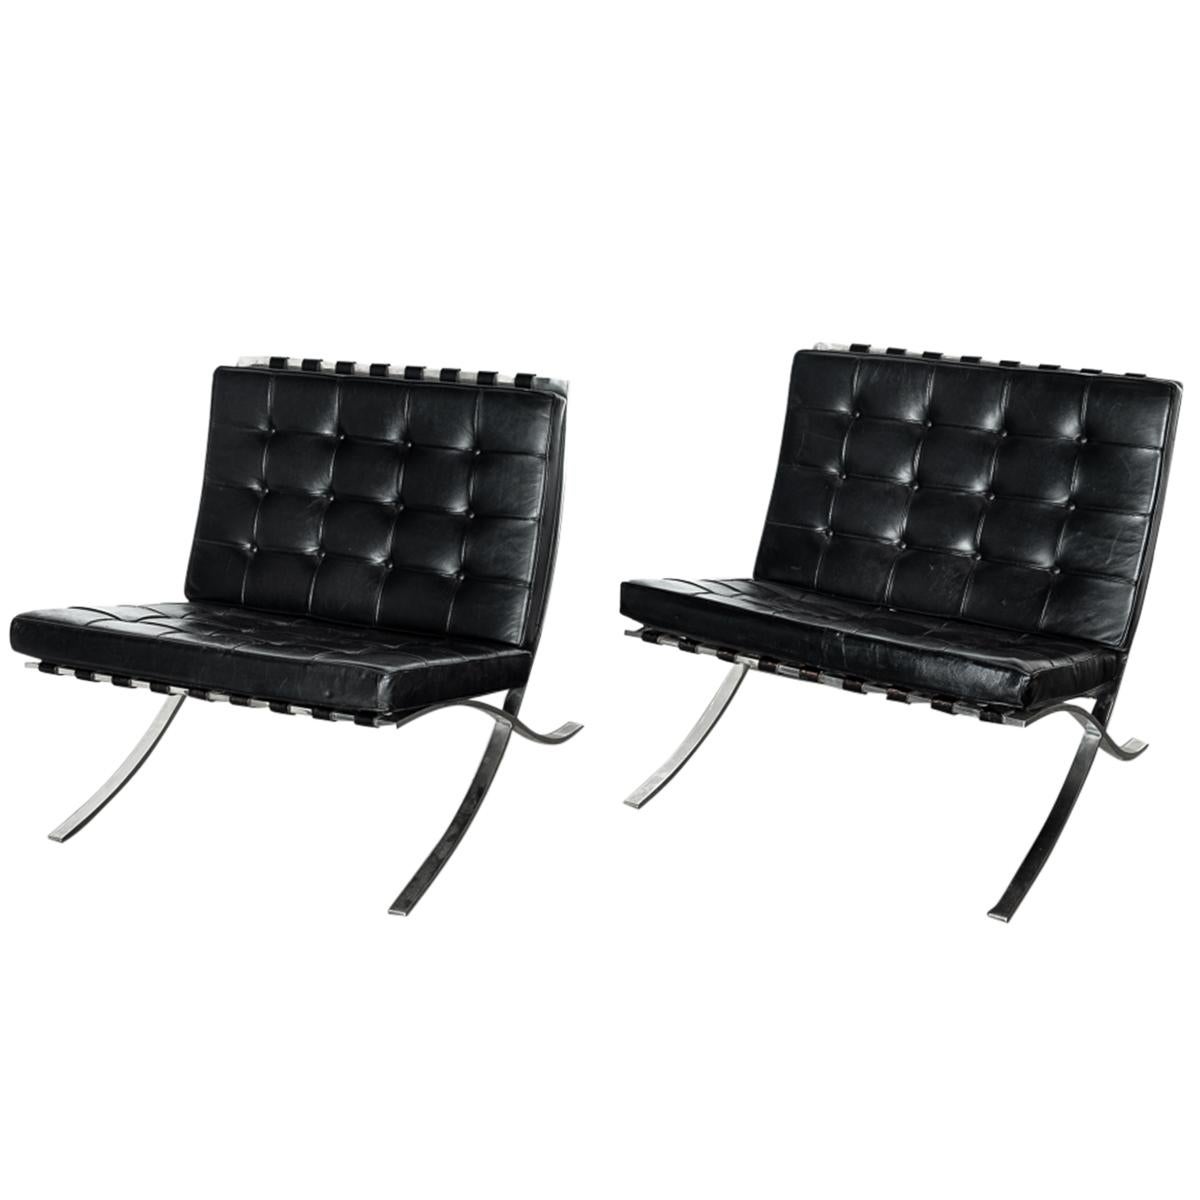 Frühes Paar MCM Knoll Barcelona-Stühle, Mies van der Rohe 1961, schwarzes Leder (20. Jahrhundert) im Angebot